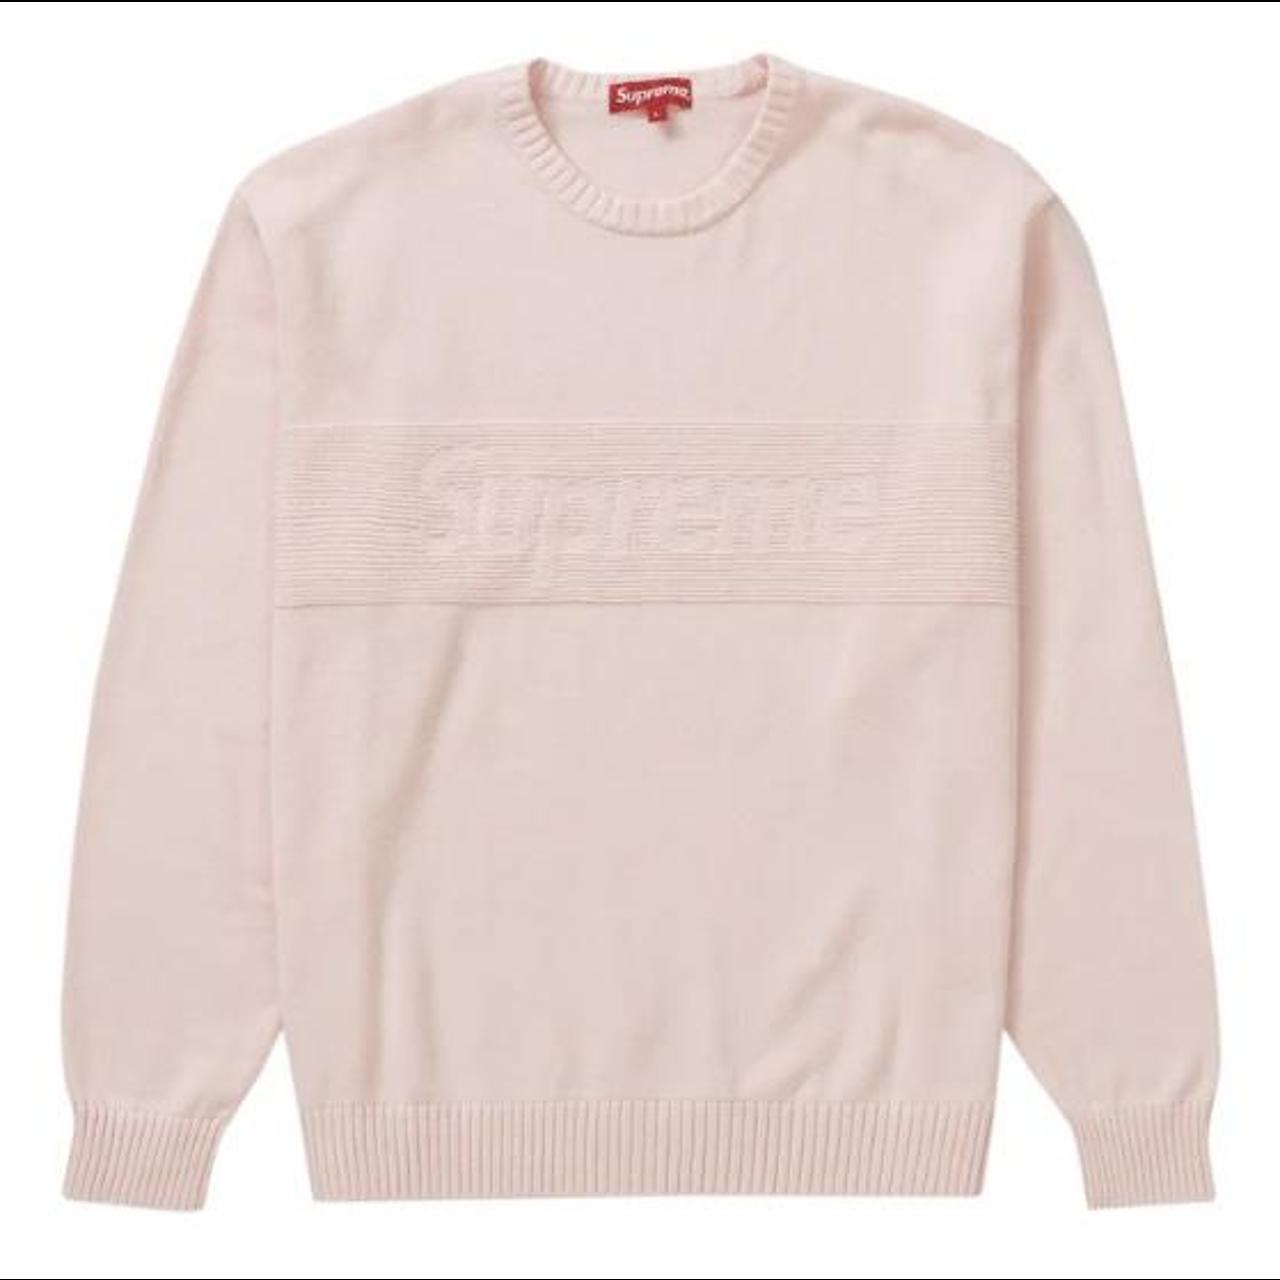 Supreme Tonal Paneled Sweater It's Brand new and... - Depop